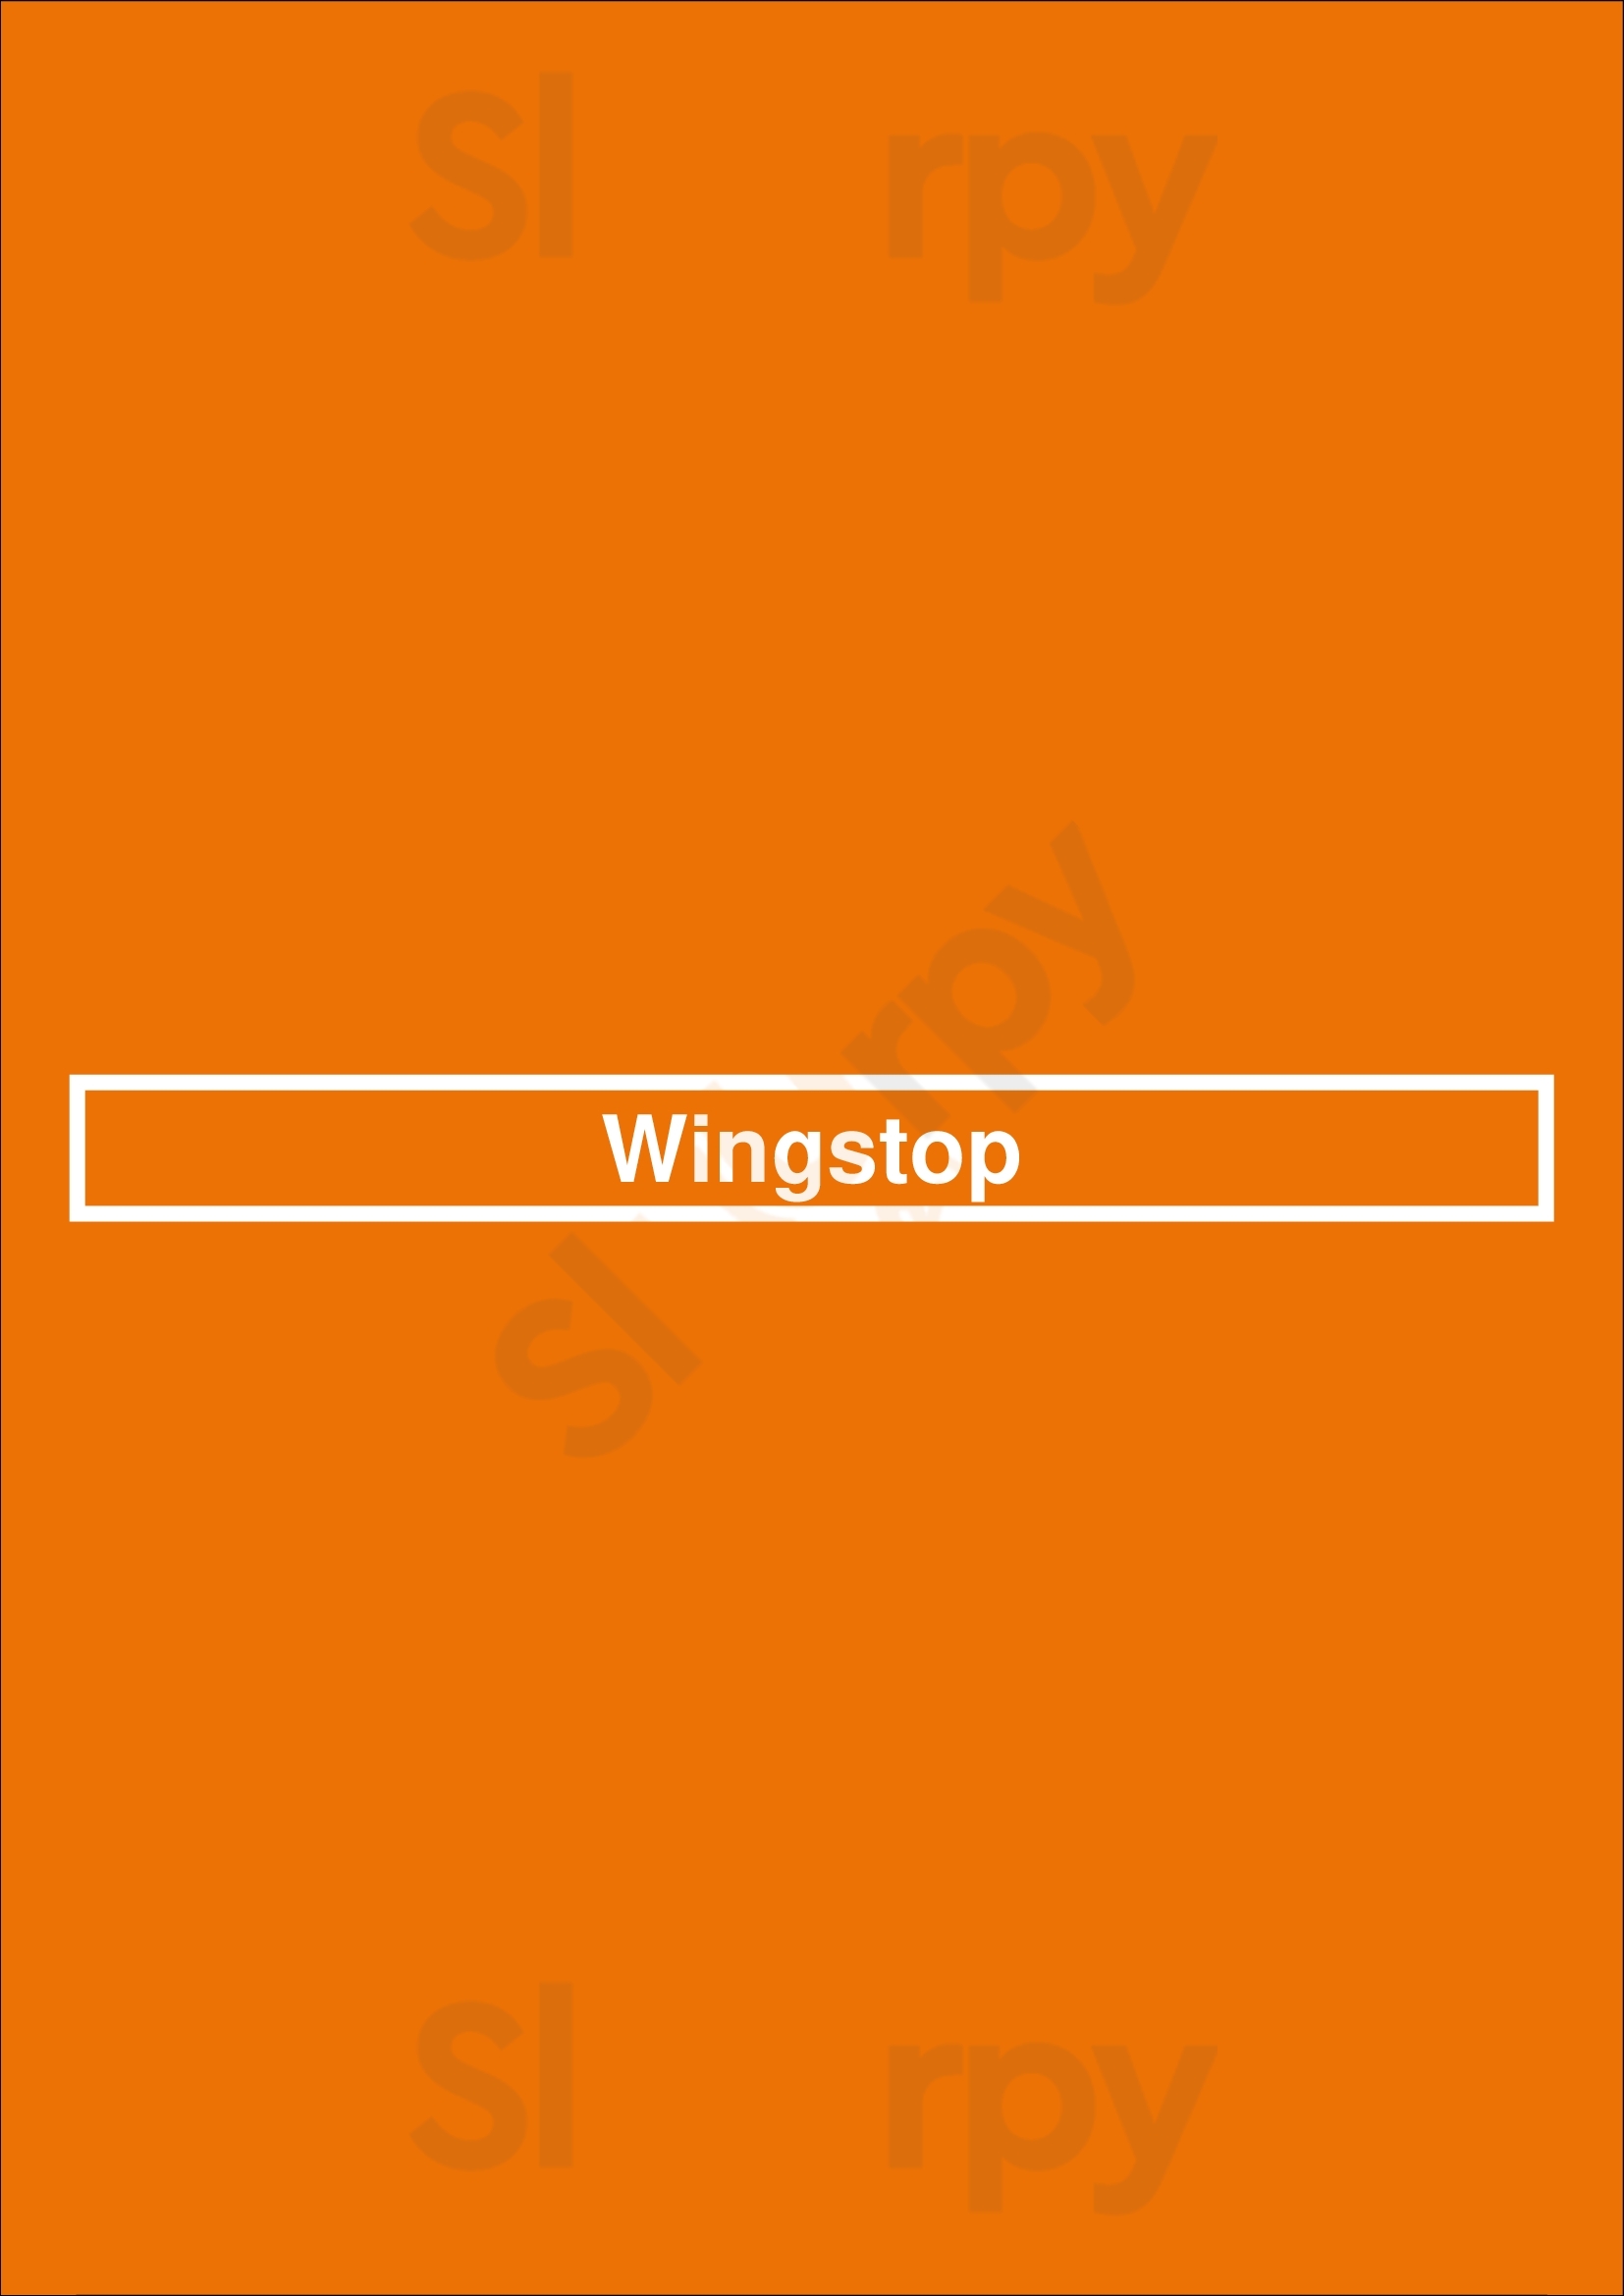 Wingstop Chicago Menu - 1